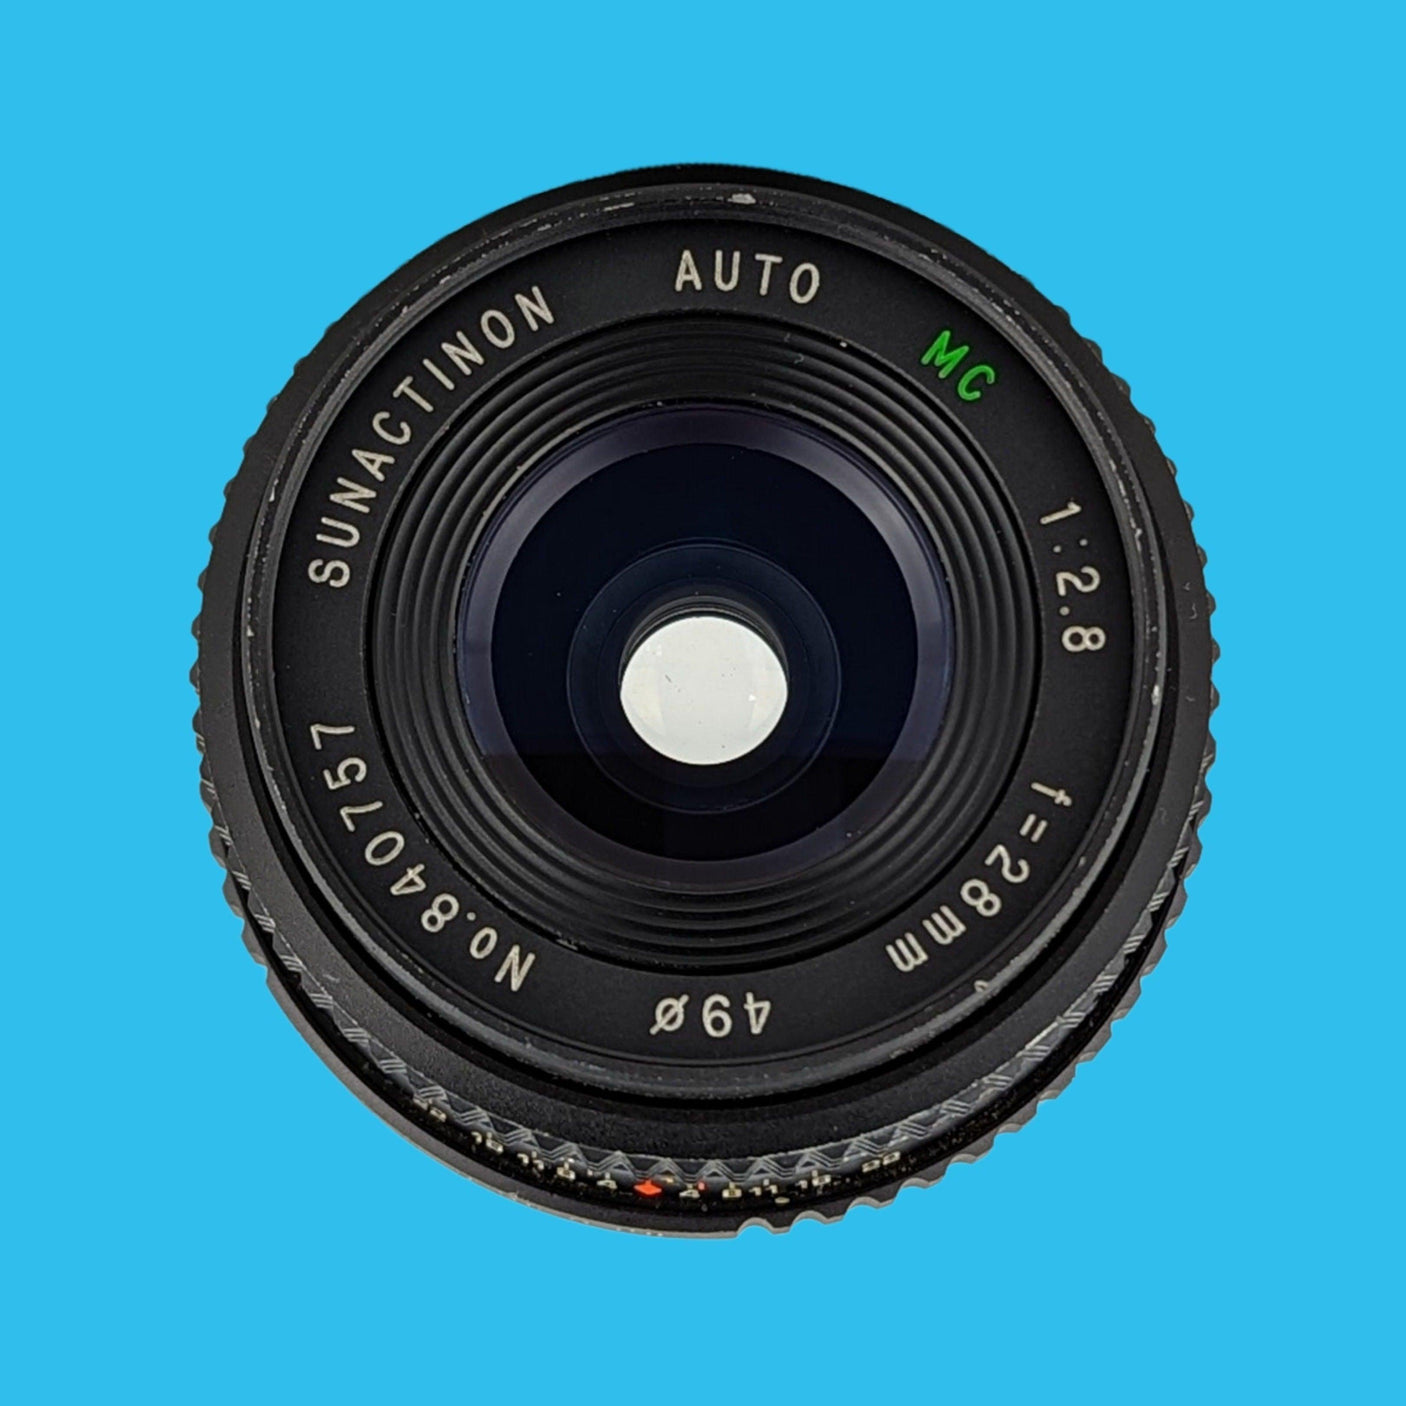 Sunactinon 28mm f/2.8 Camera Lens